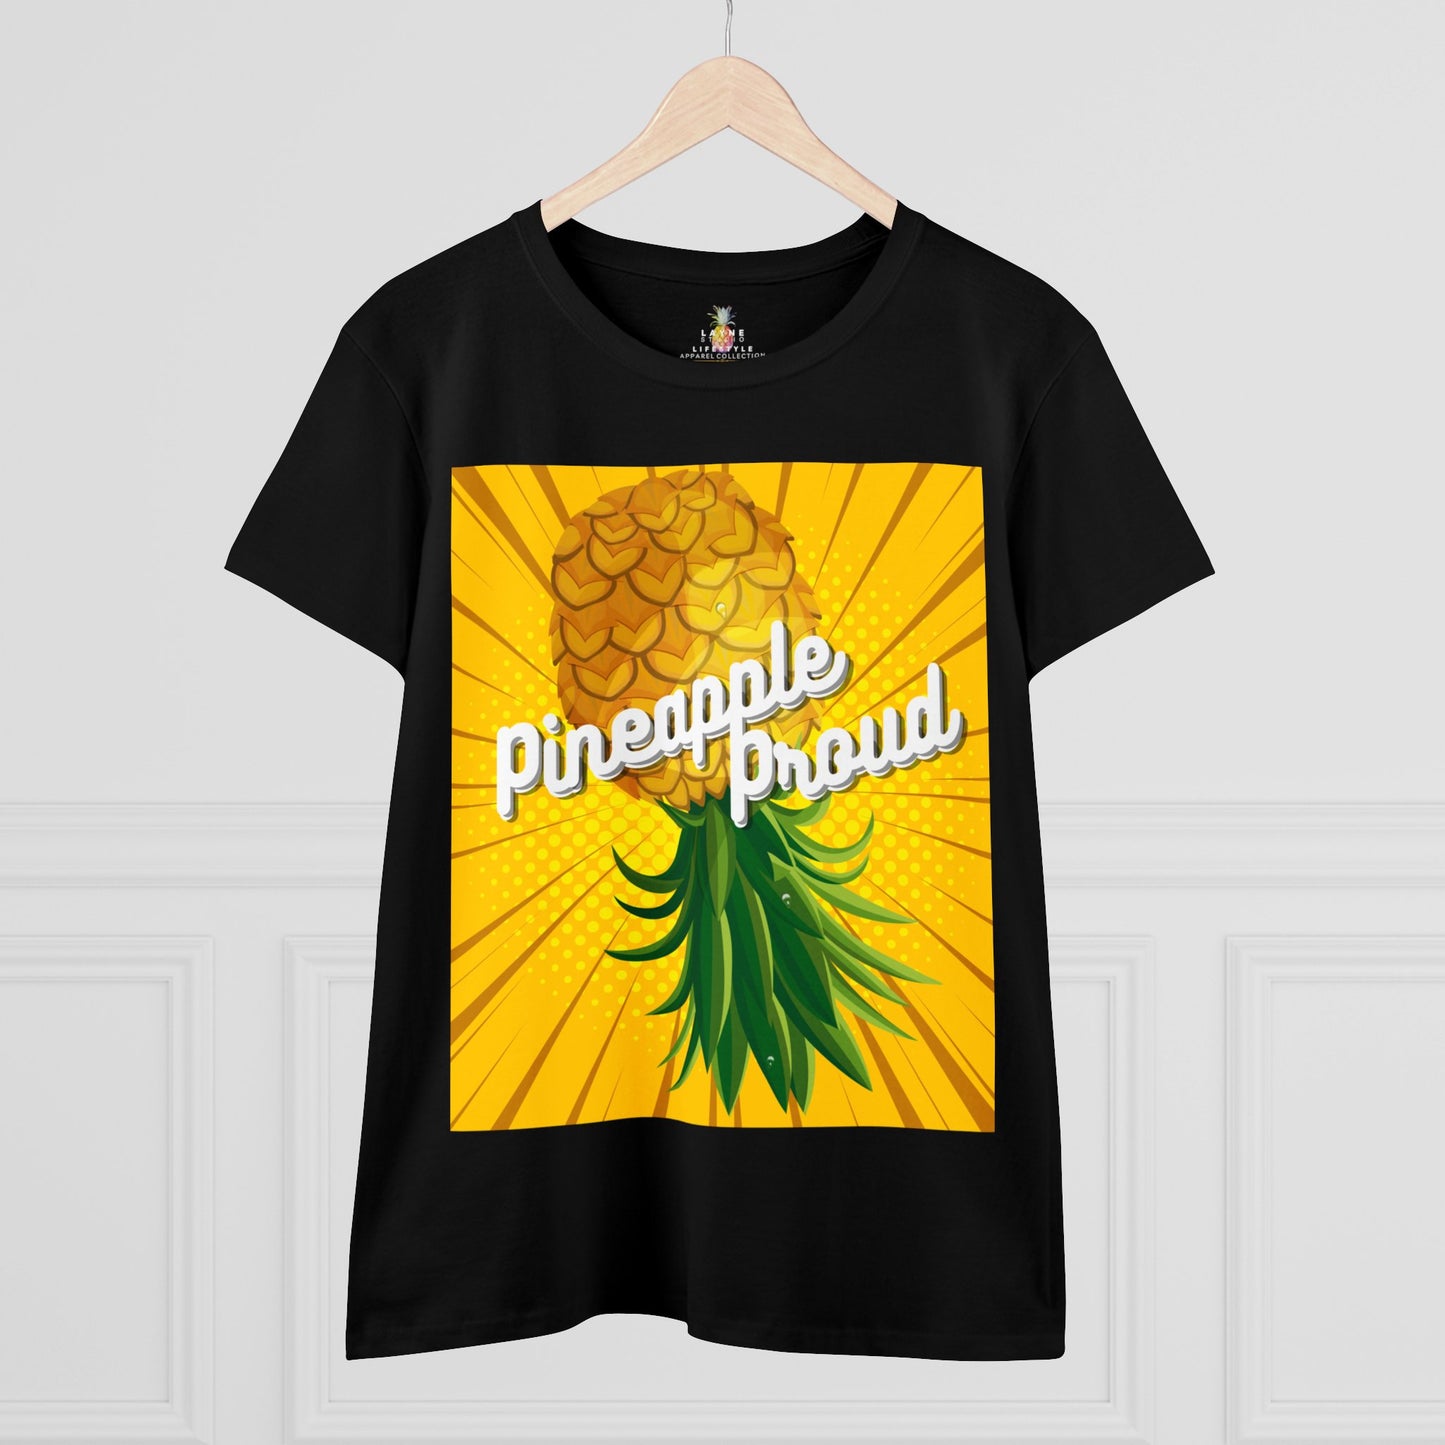 "Pineapple Proud" Graphic Women's Midweight Cotton Tee